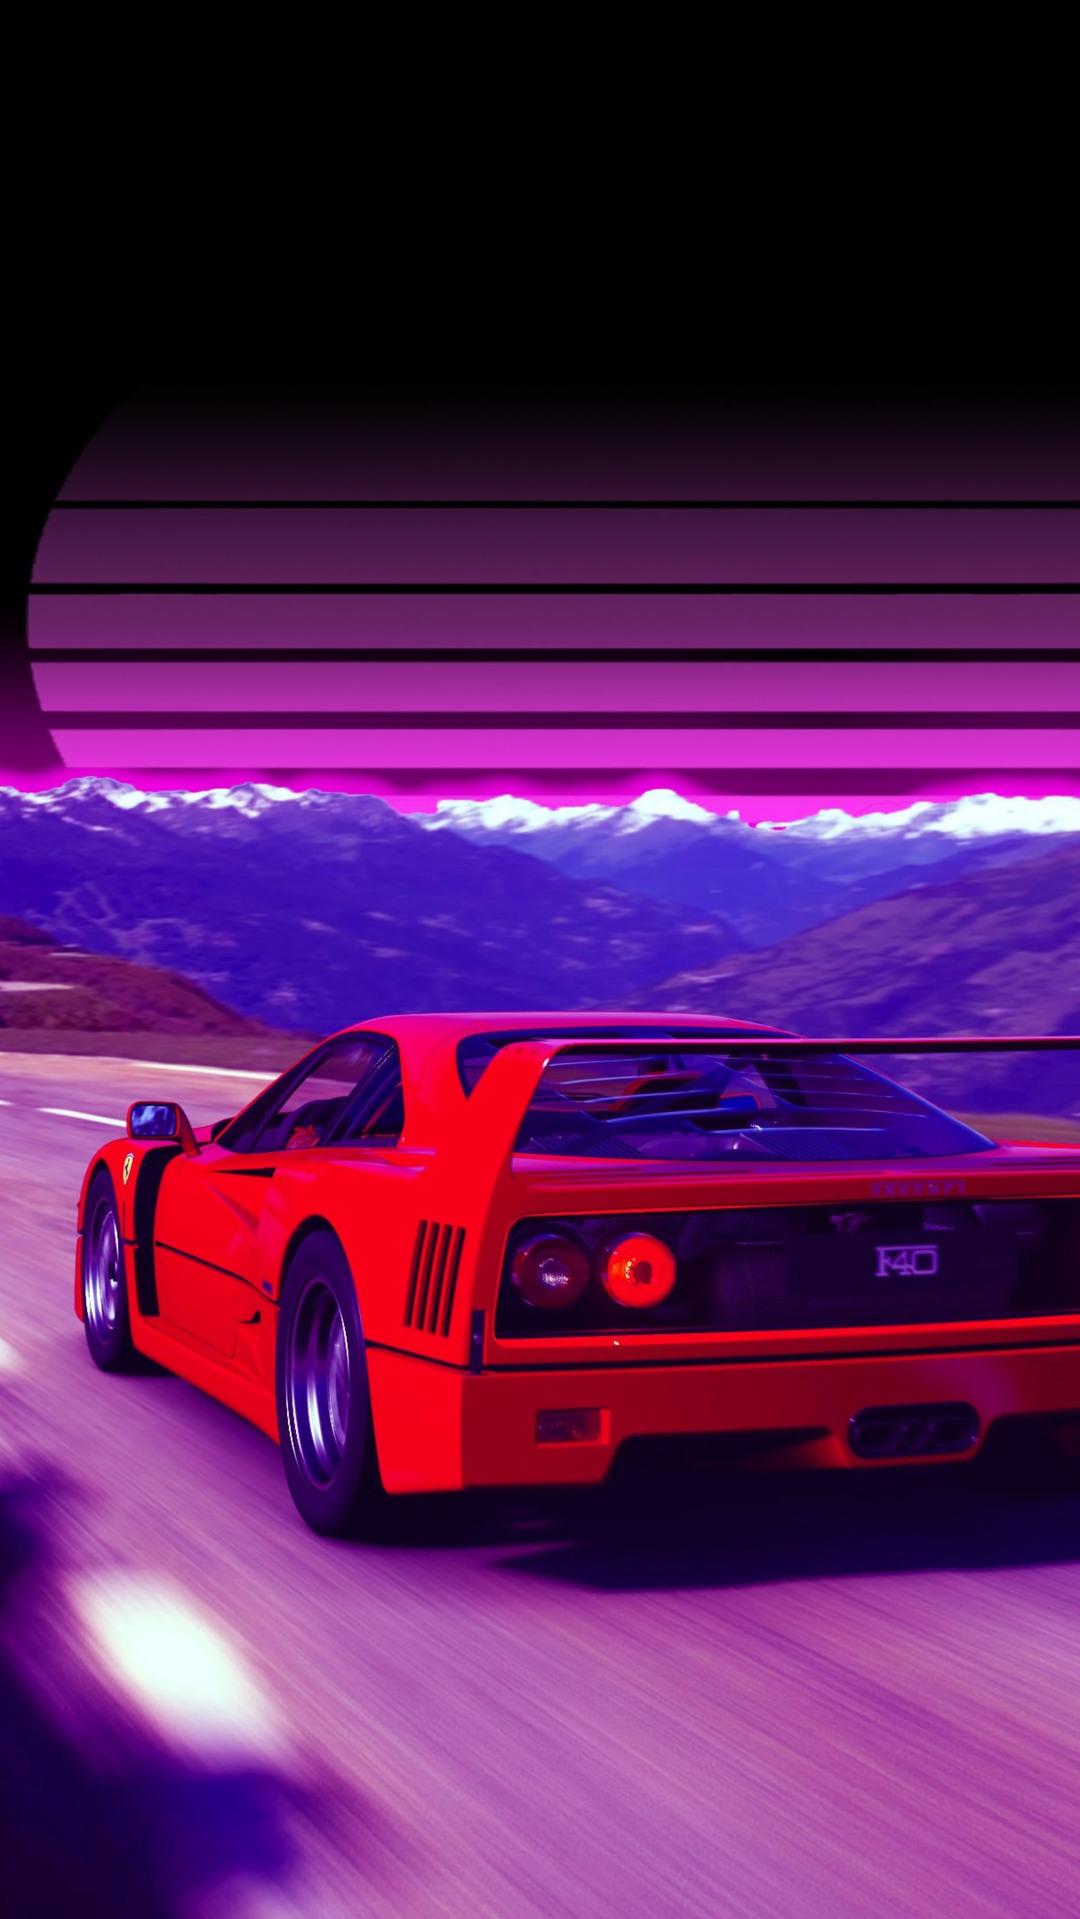 Ferrari F40 Sports Car Outrun Digital Art HD 4k Wallpaper